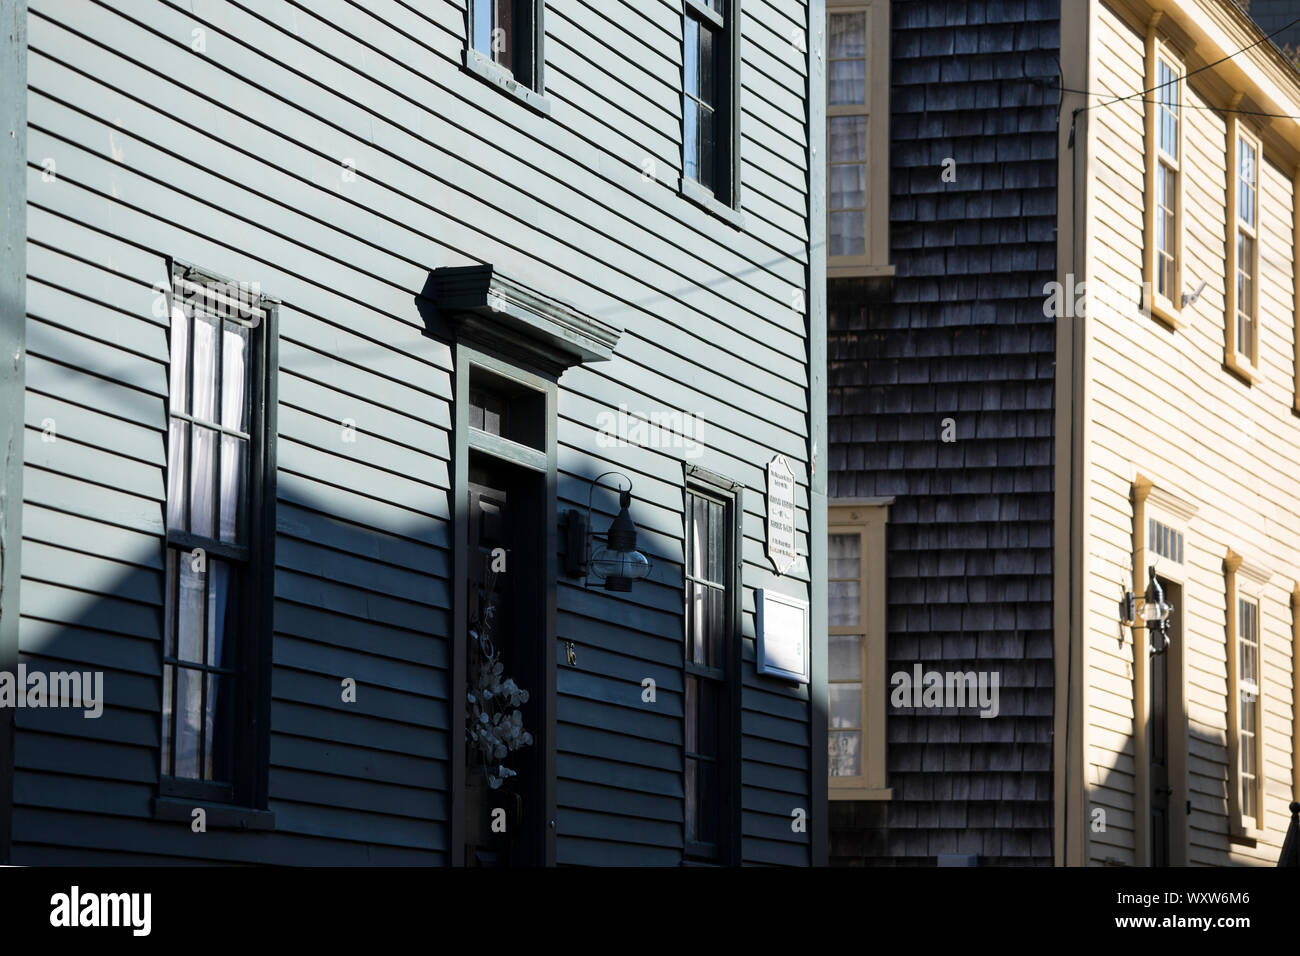 Traditional wood clapboard and cedar shingle homes in Newport, Rhode Island, USA Stock Photo